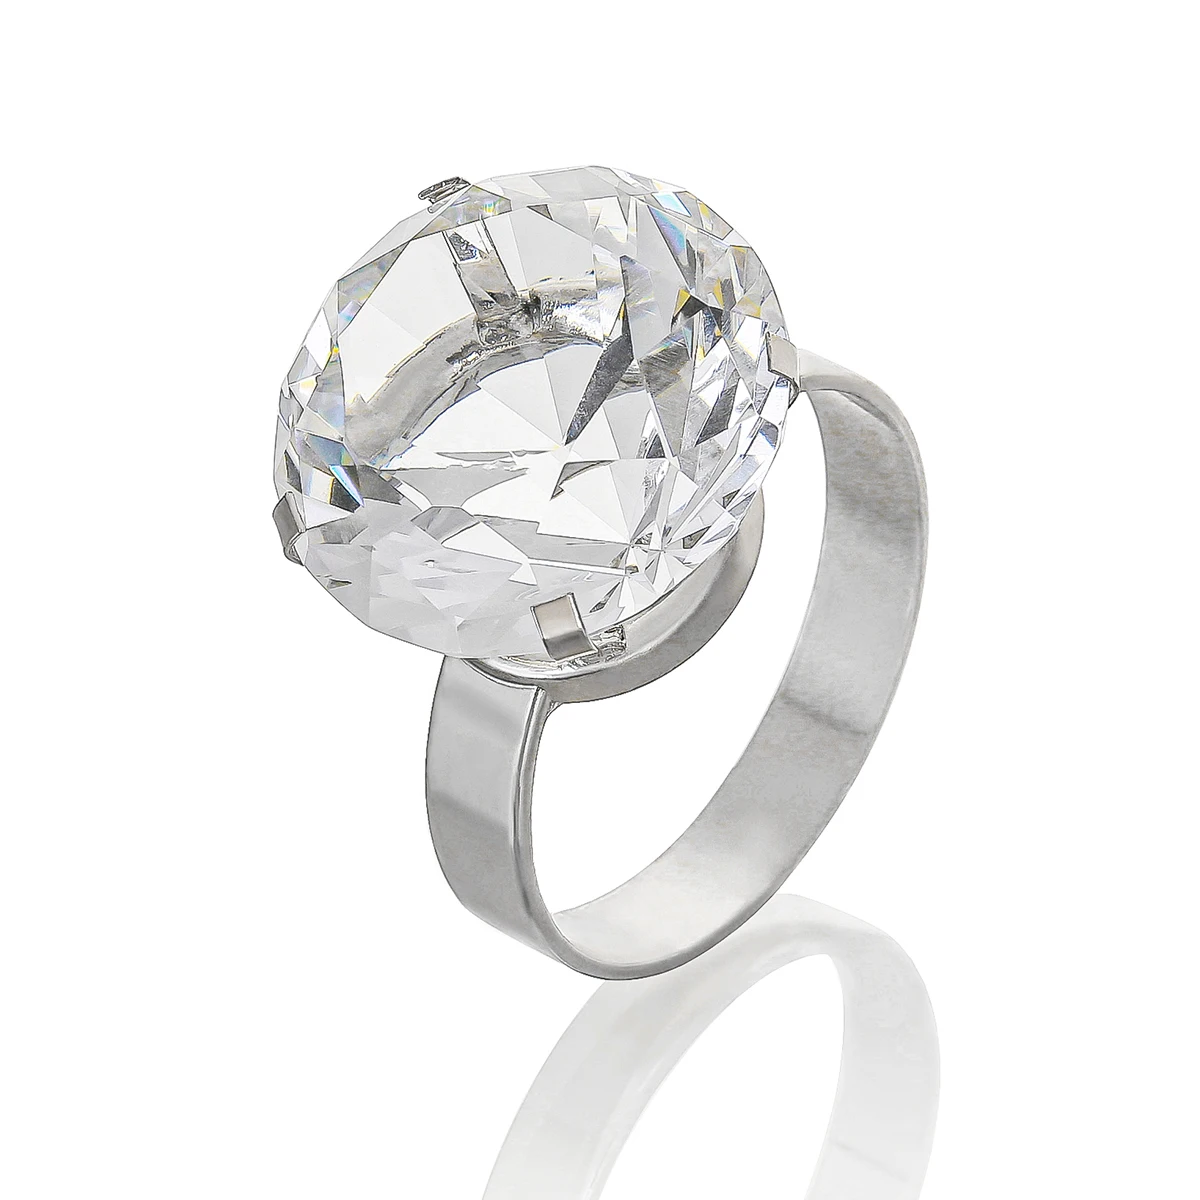 Оптовая продажа, 12 шт./лот, кольца для салфеток с кристаллами K9 для свадебного украшения. Кольцо для салфеток из цинкового сплава от AliExpress RU&CIS NEW